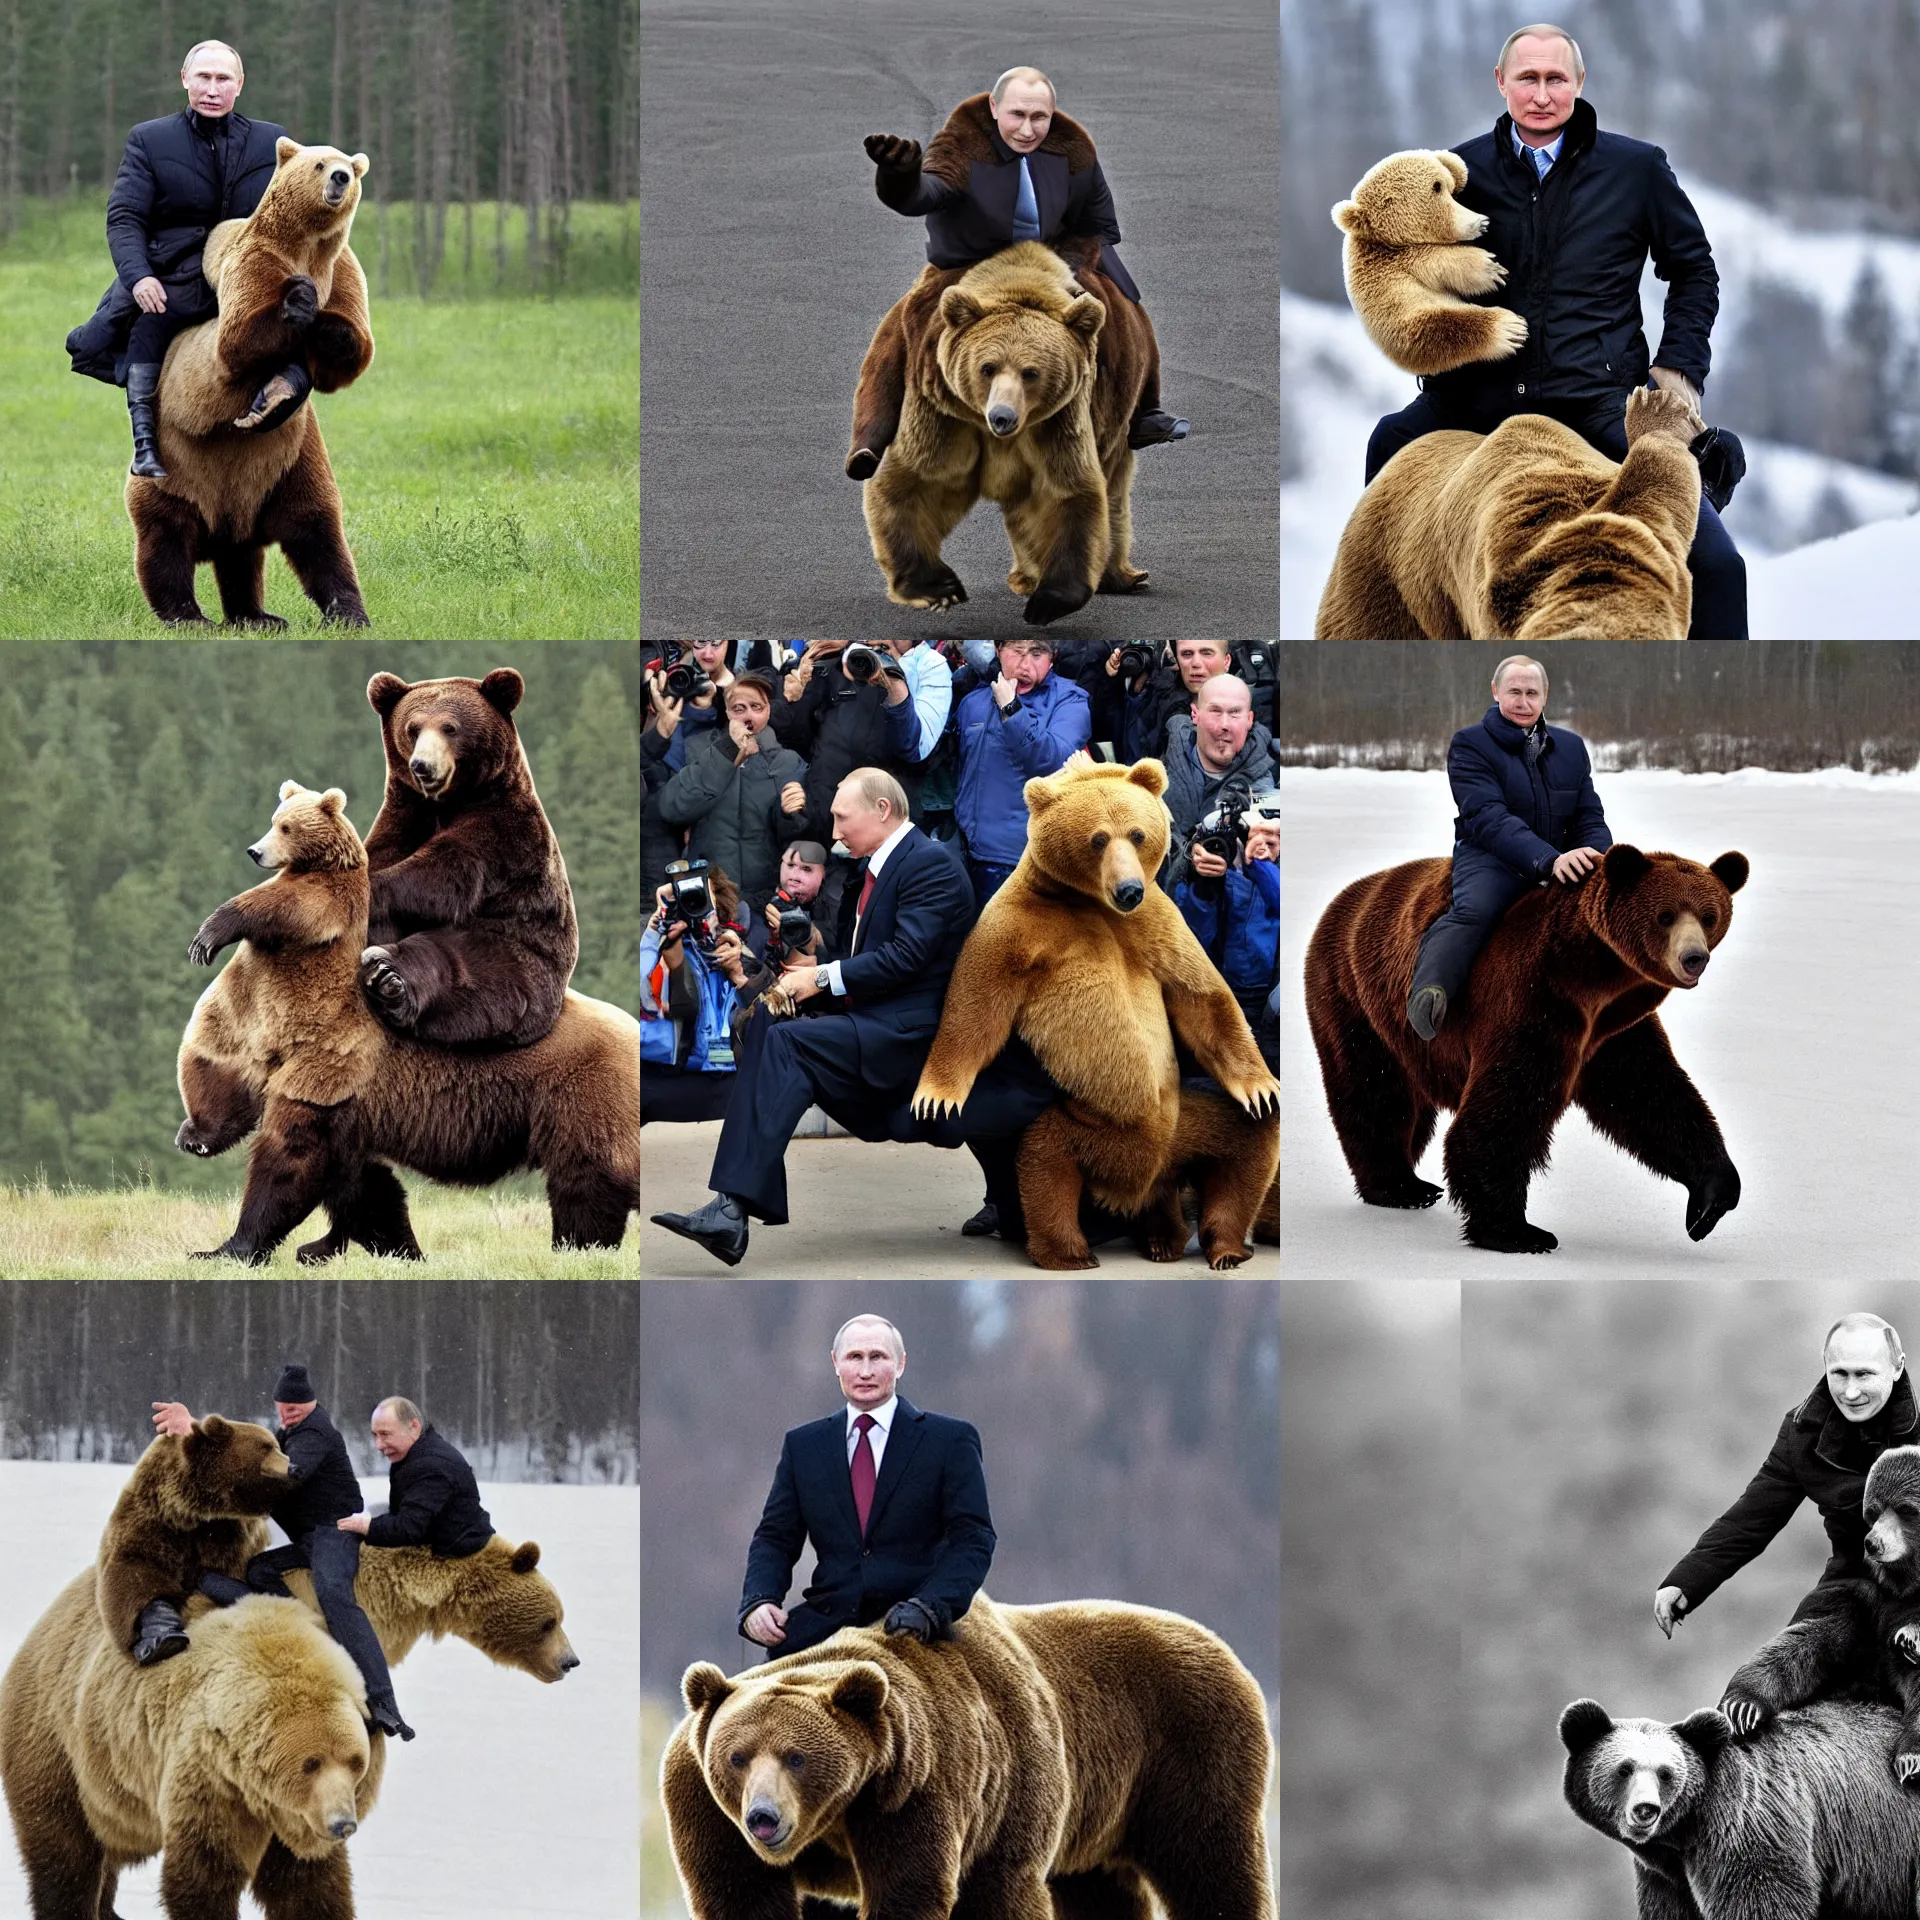 Prompt: photo of Vladimir Putin riding a Bear